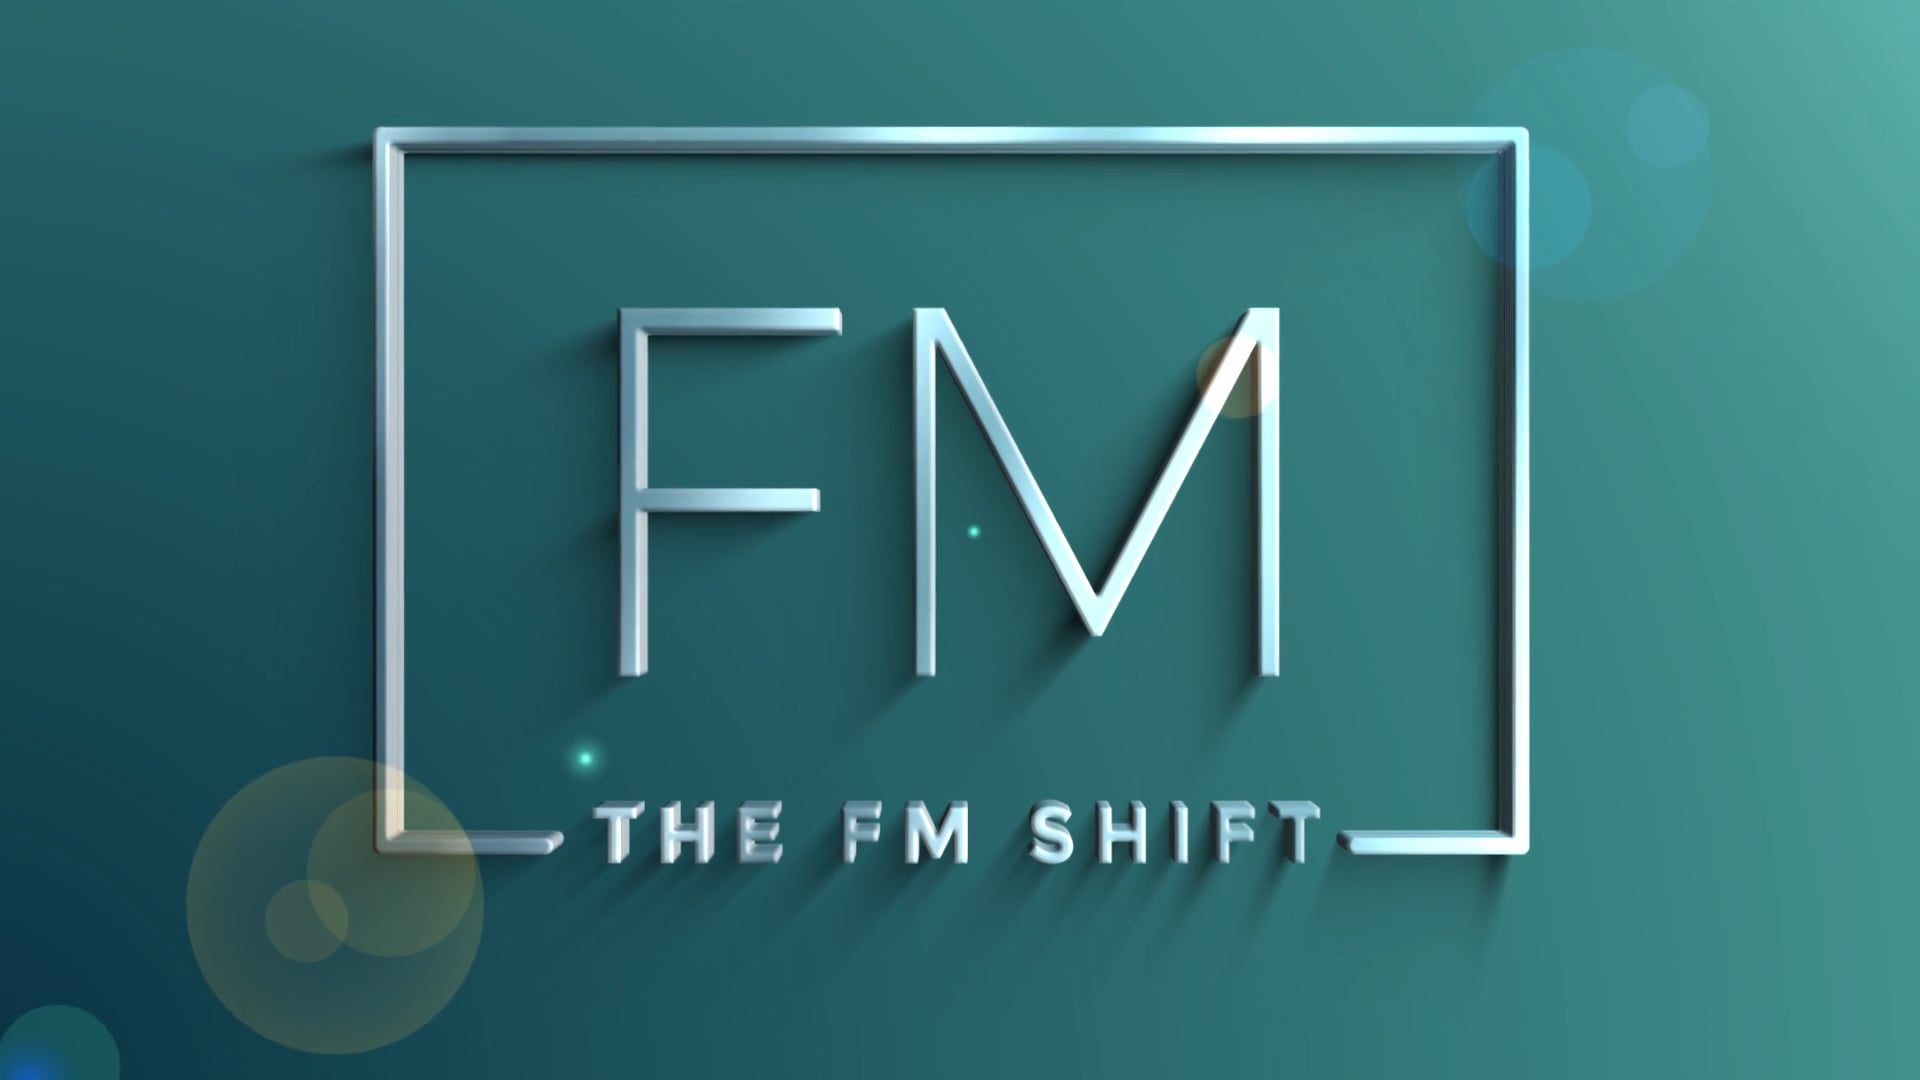 THE FM SHIFT - PHOENIX CONFERENCE